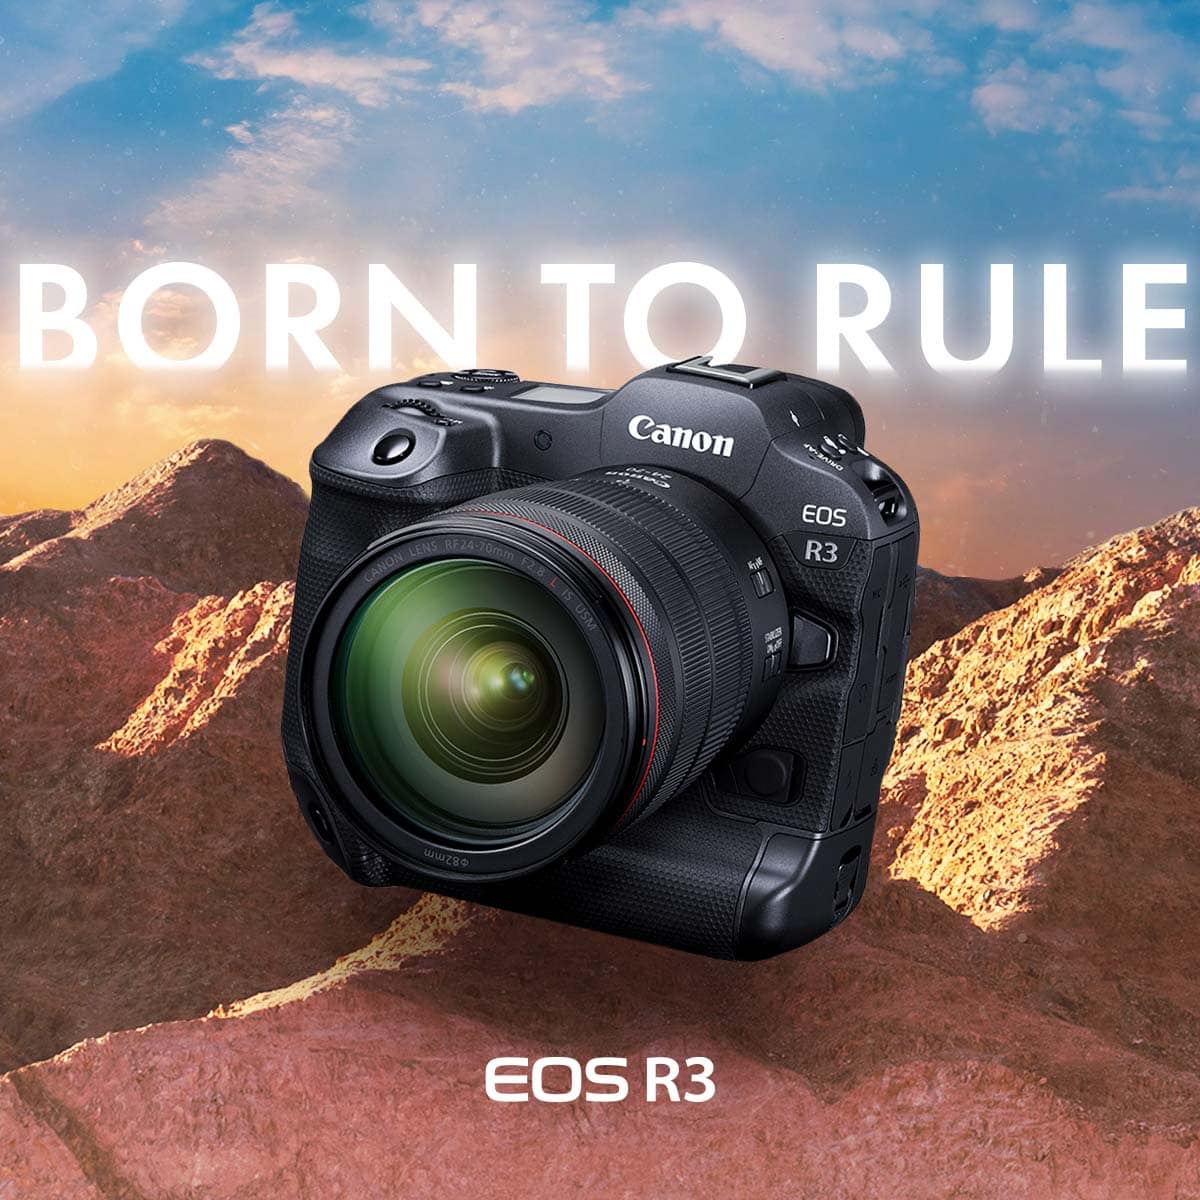 Canon EOS R3 ที่สุดของเทคโนโลยีในตระกูล EOS R พร้อมเลนส์ RF ใหม่ ให้ทุกการสร้างสรรค์เหนือจินตนาการเป็นไปได้ 1